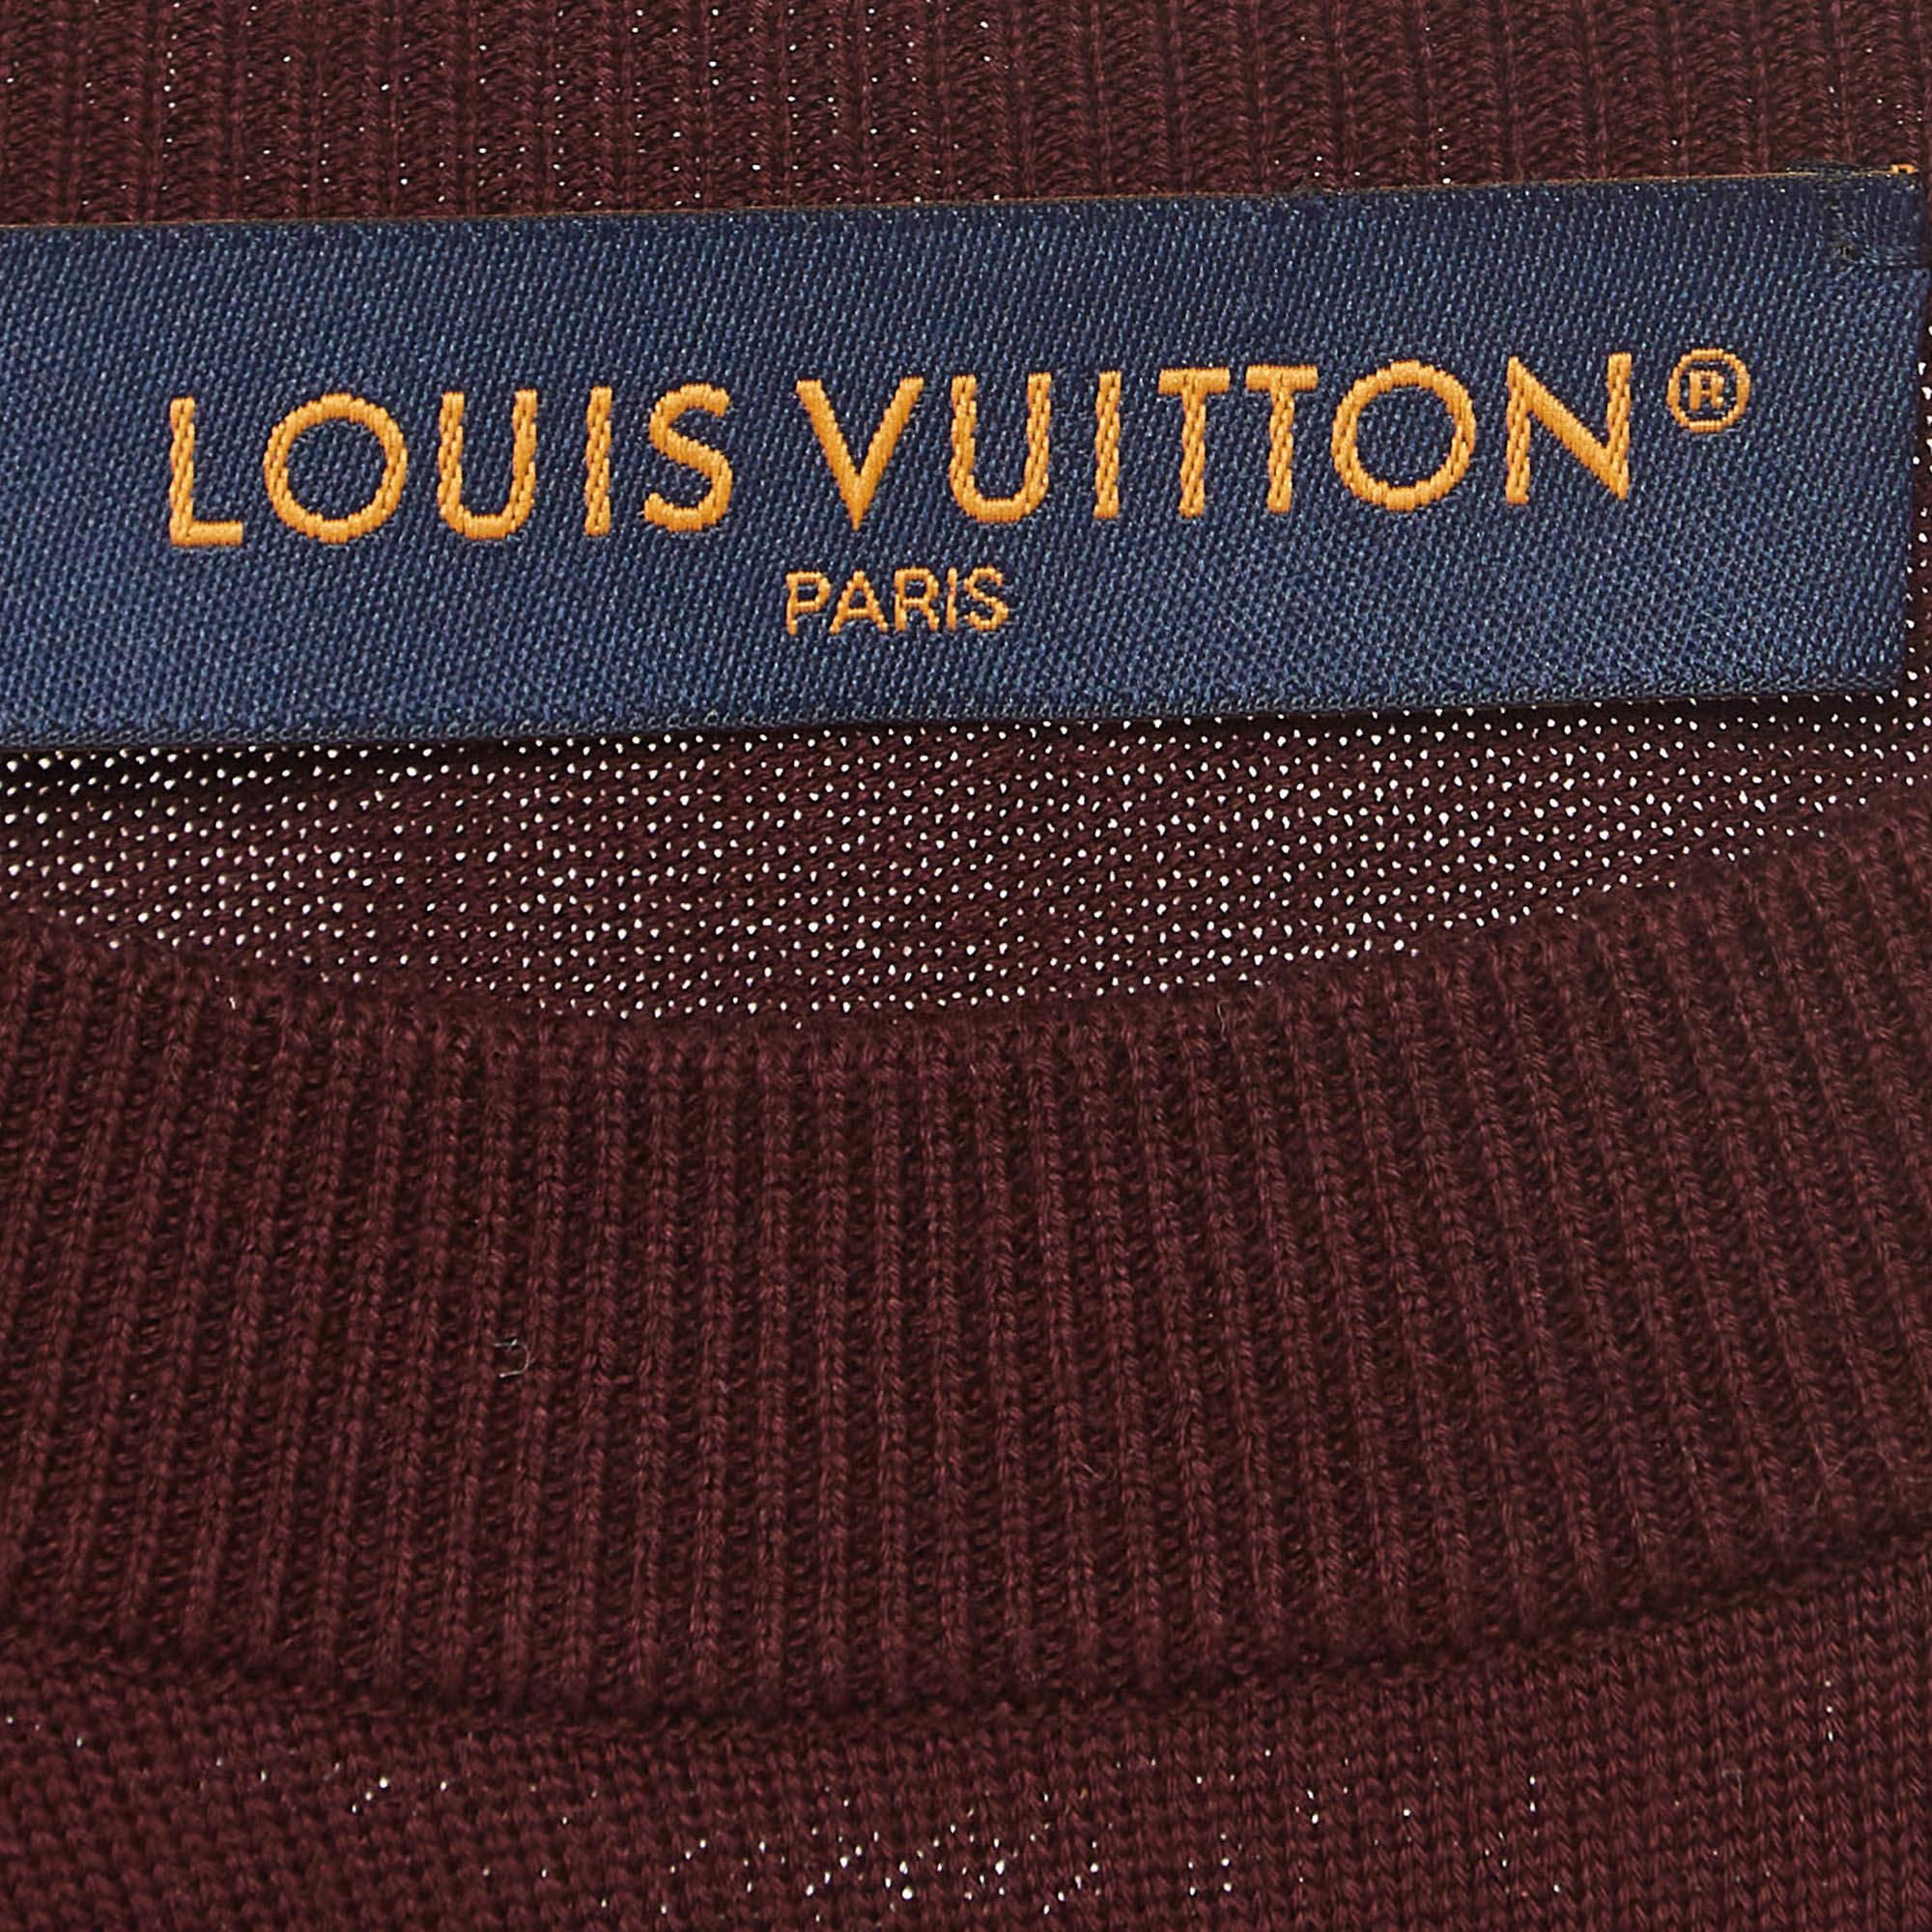 Black Louis Vuitton Burgundy Intarsia Cotton Knit Crew Neck T-Shirt S